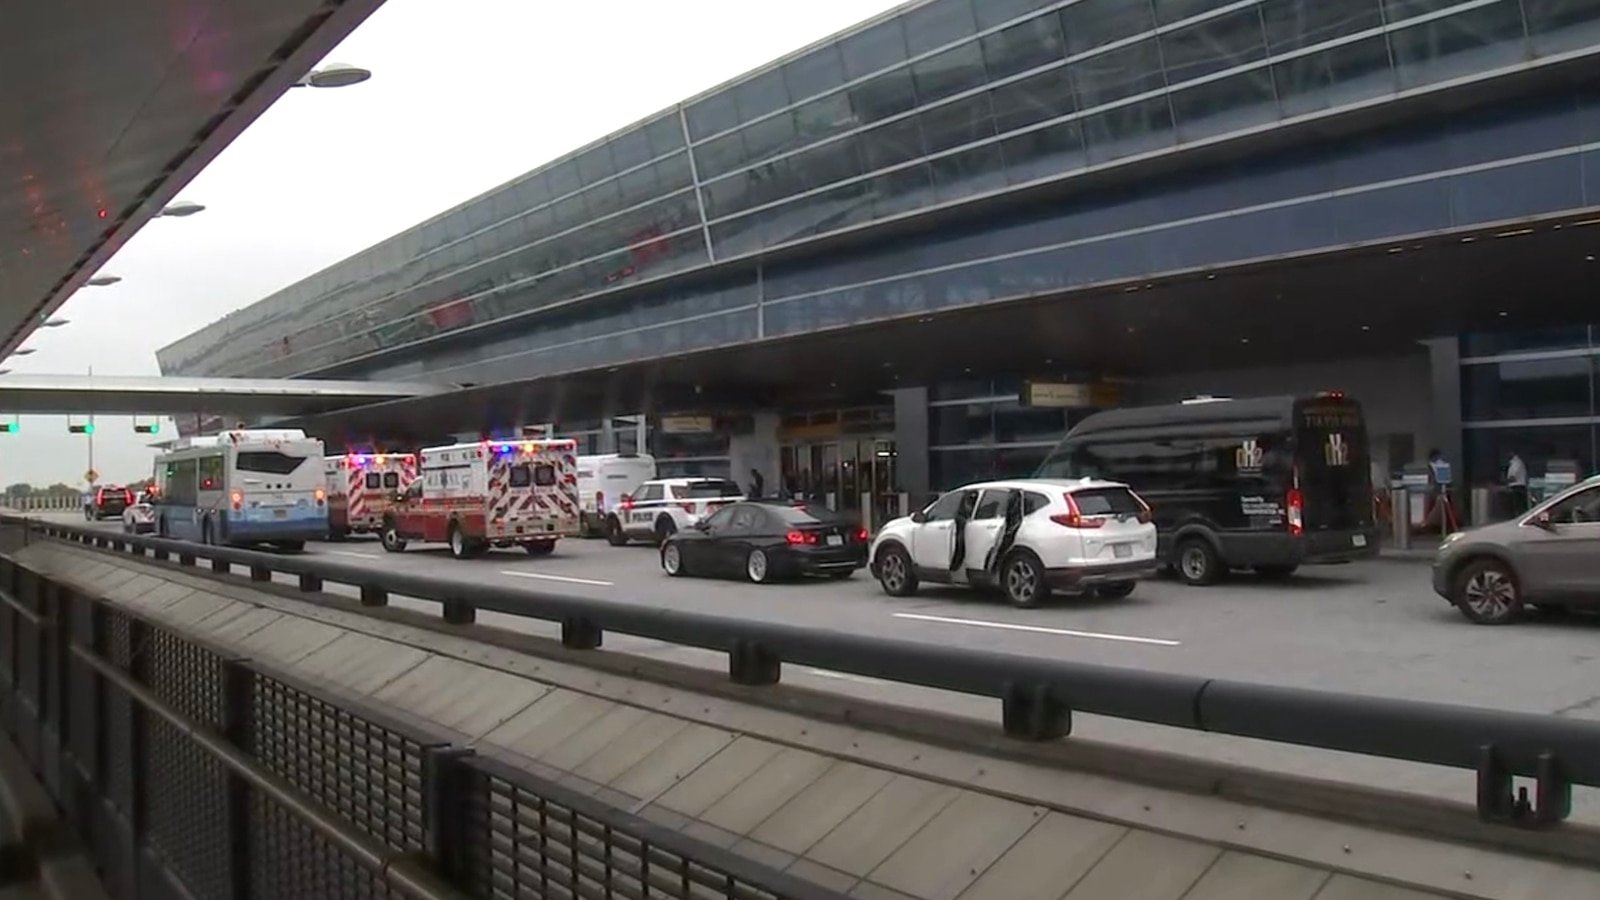 9 injured in JFK airport escalator fire